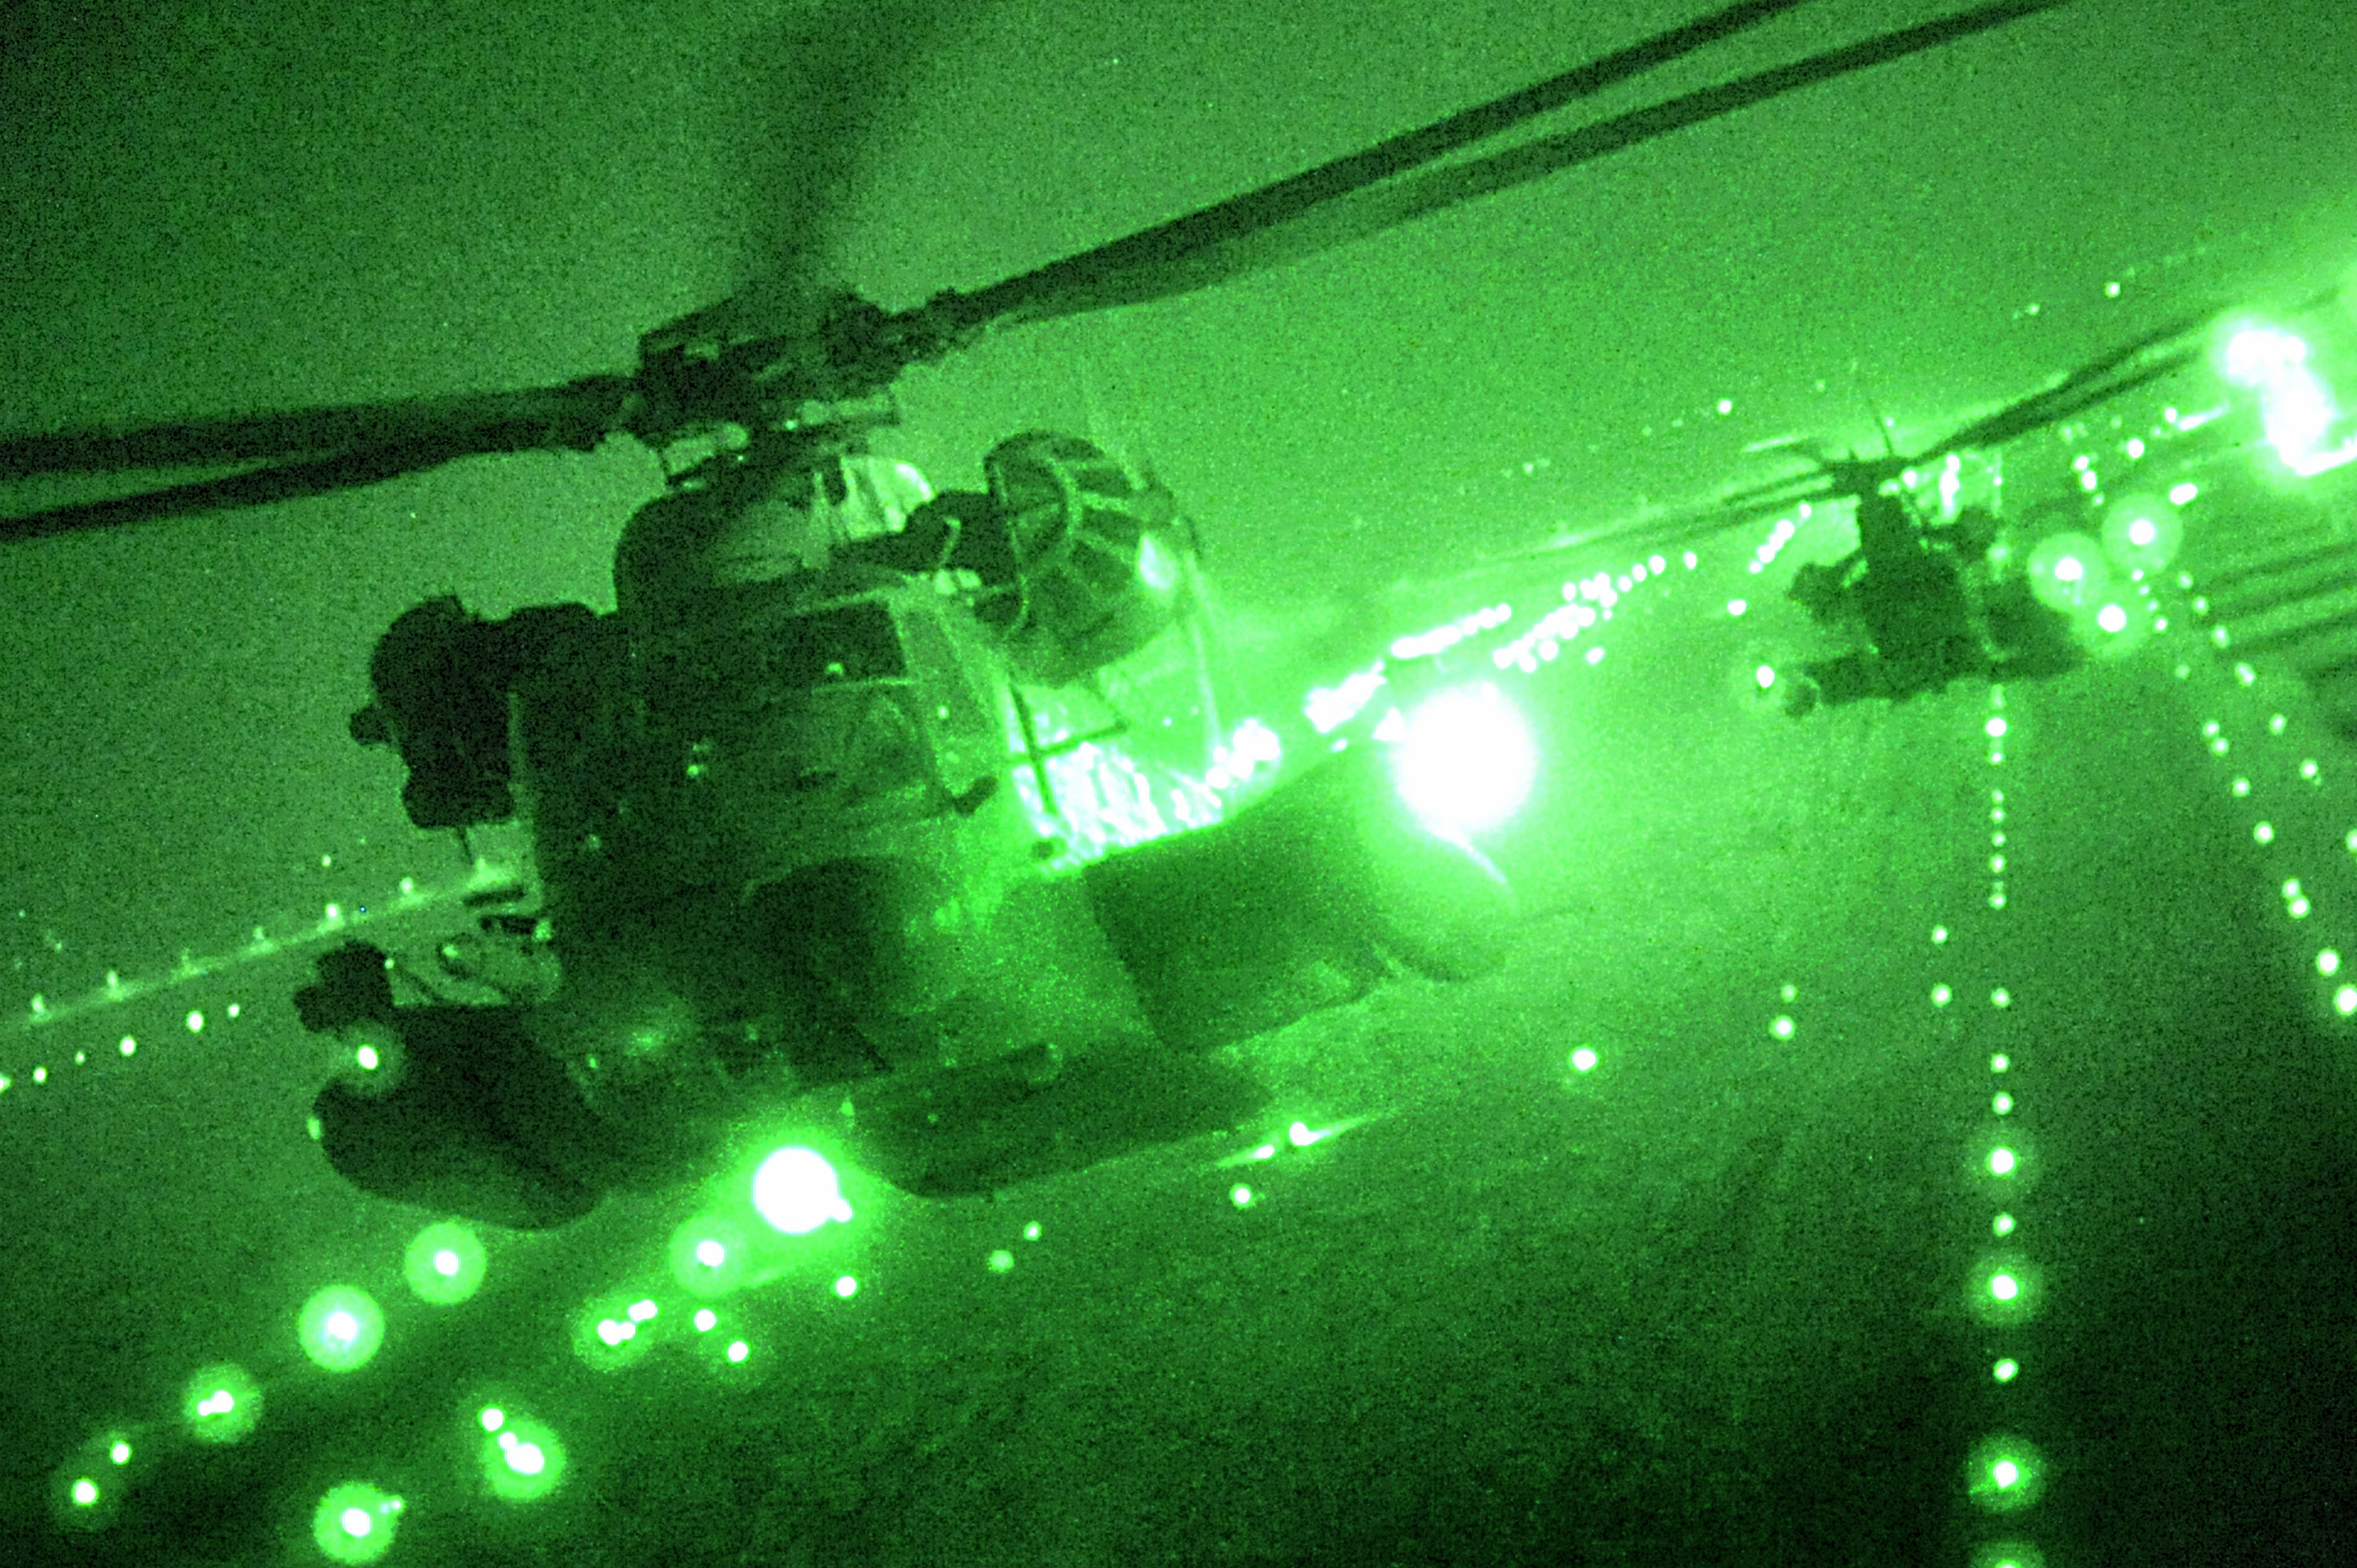 Sikorsky-MH-53M-Pave-Low-IV-night.jpg